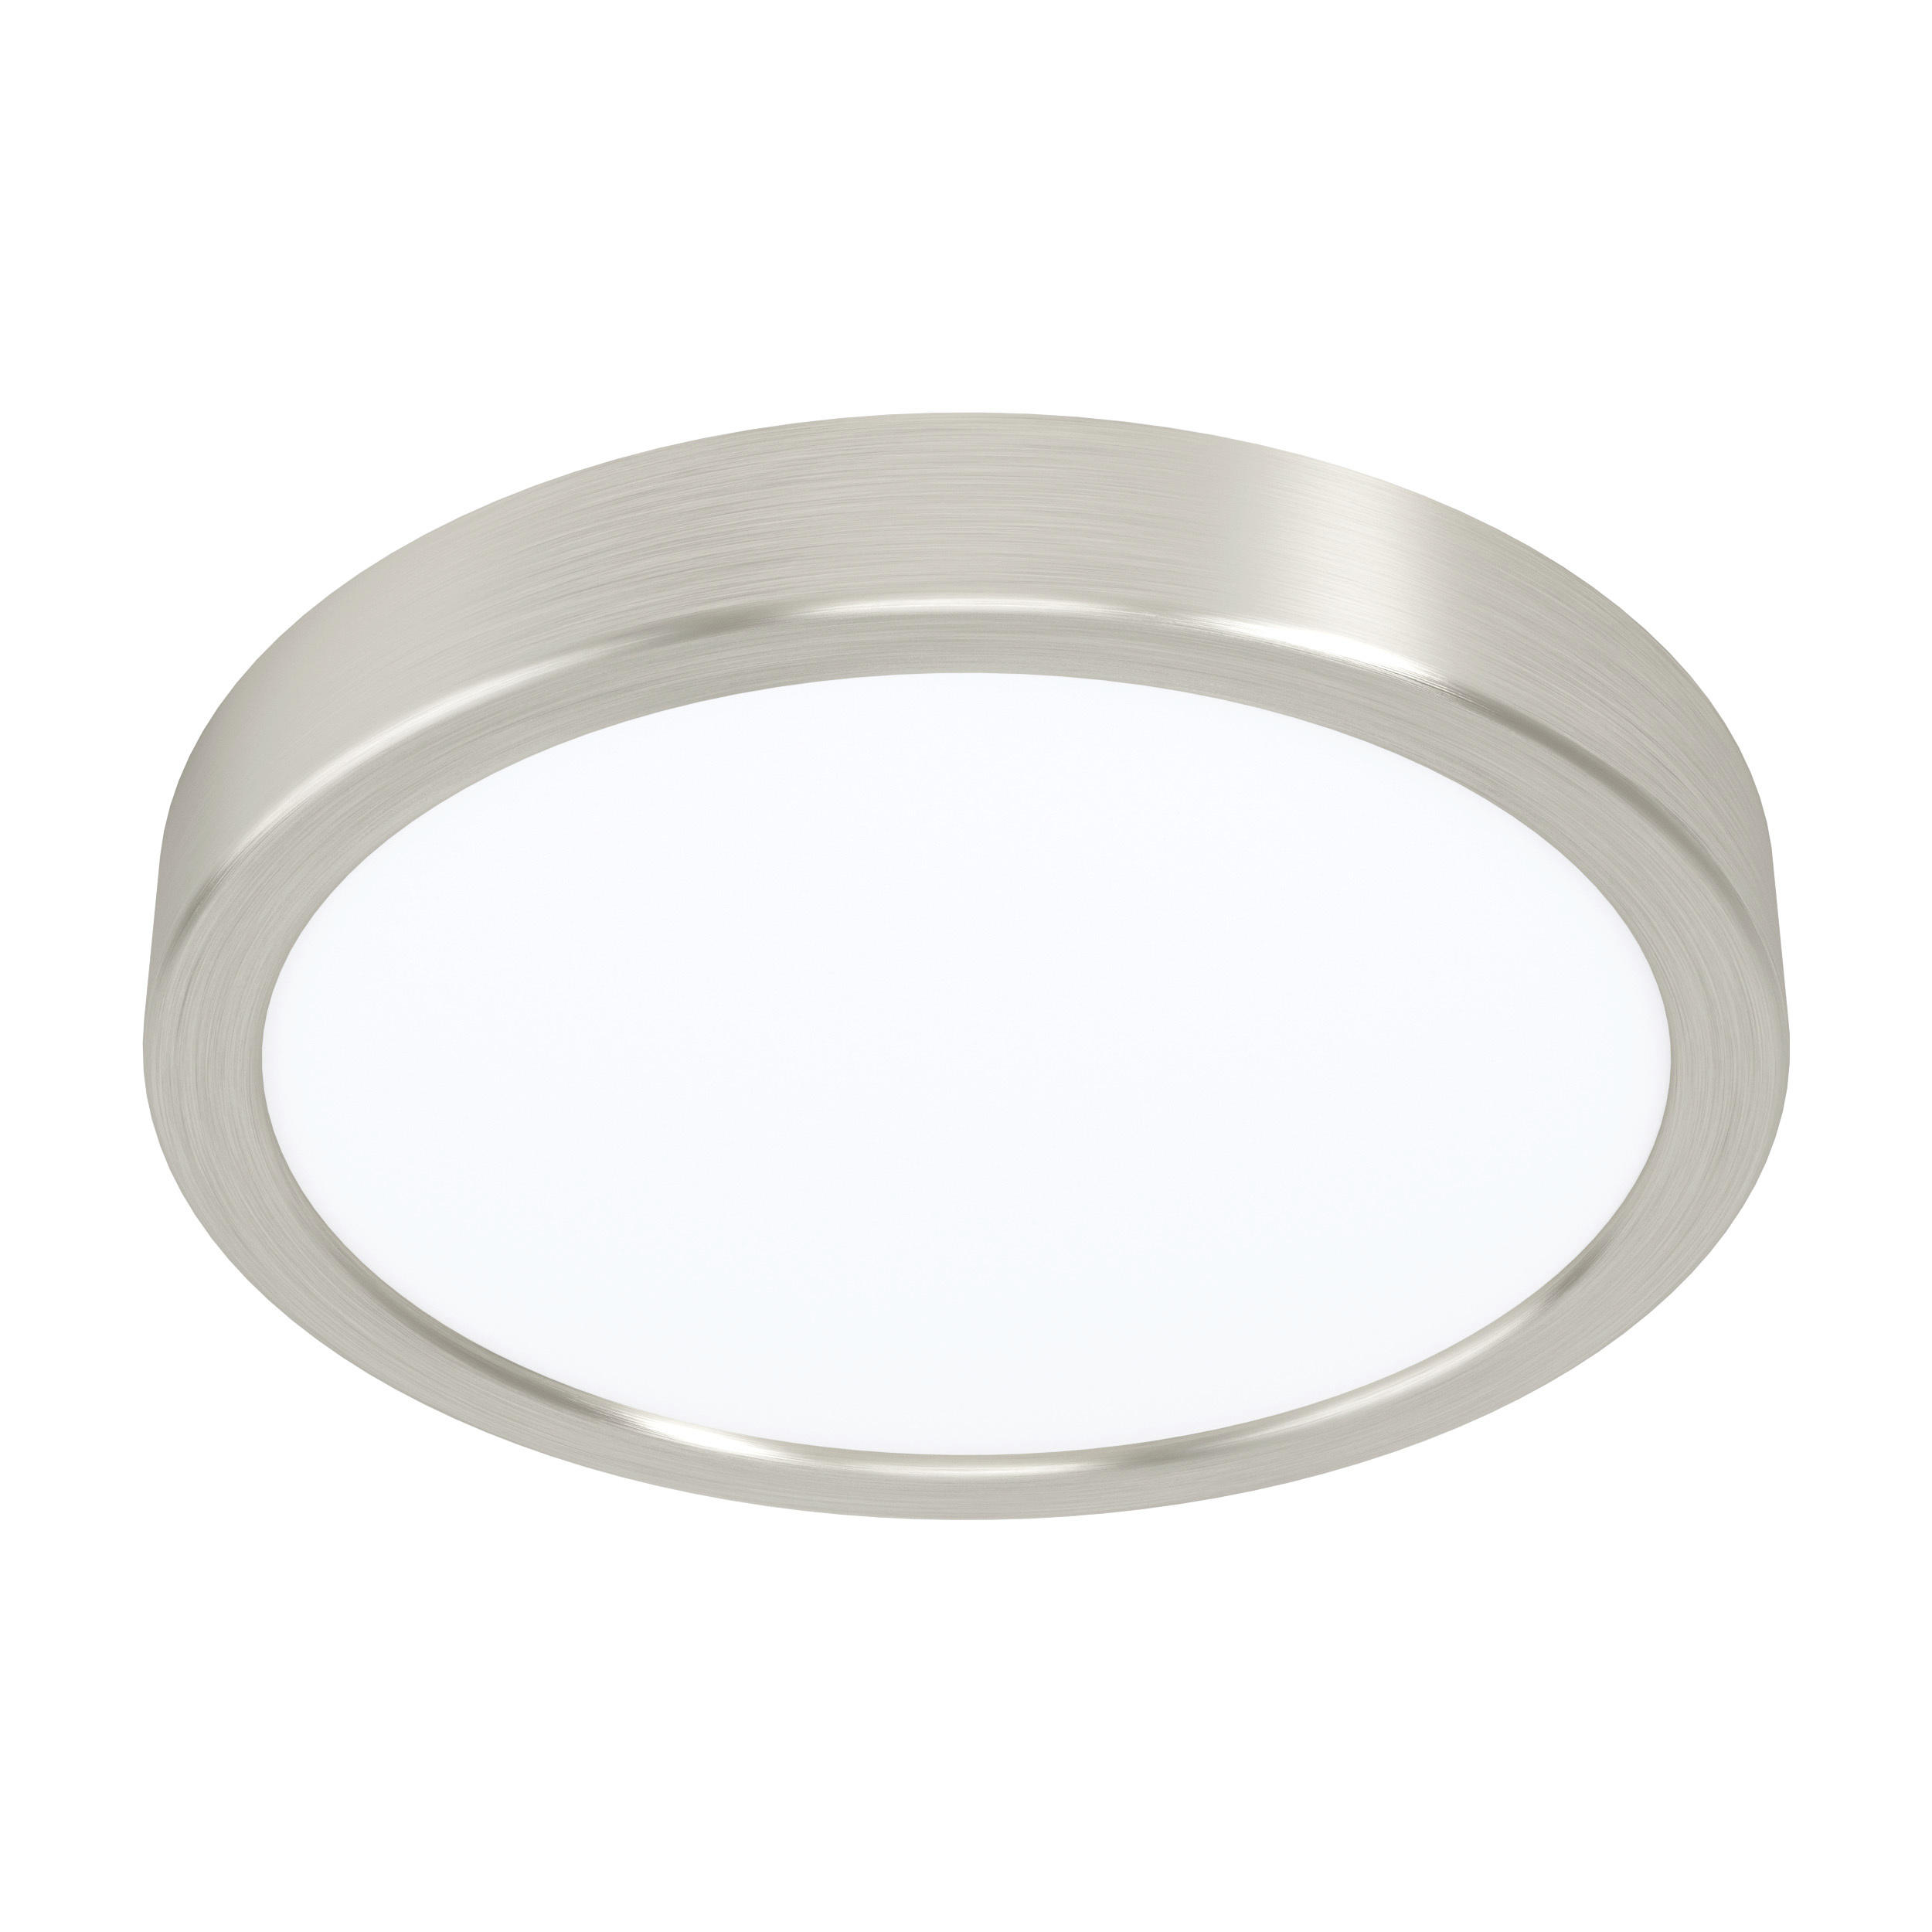 LED-DECKENLEUCHTE FUEVA 21/2,8 cm   - Weiß/Nickelfarben, Basics, Kunststoff/Metall (21/2,8cm) - Novel